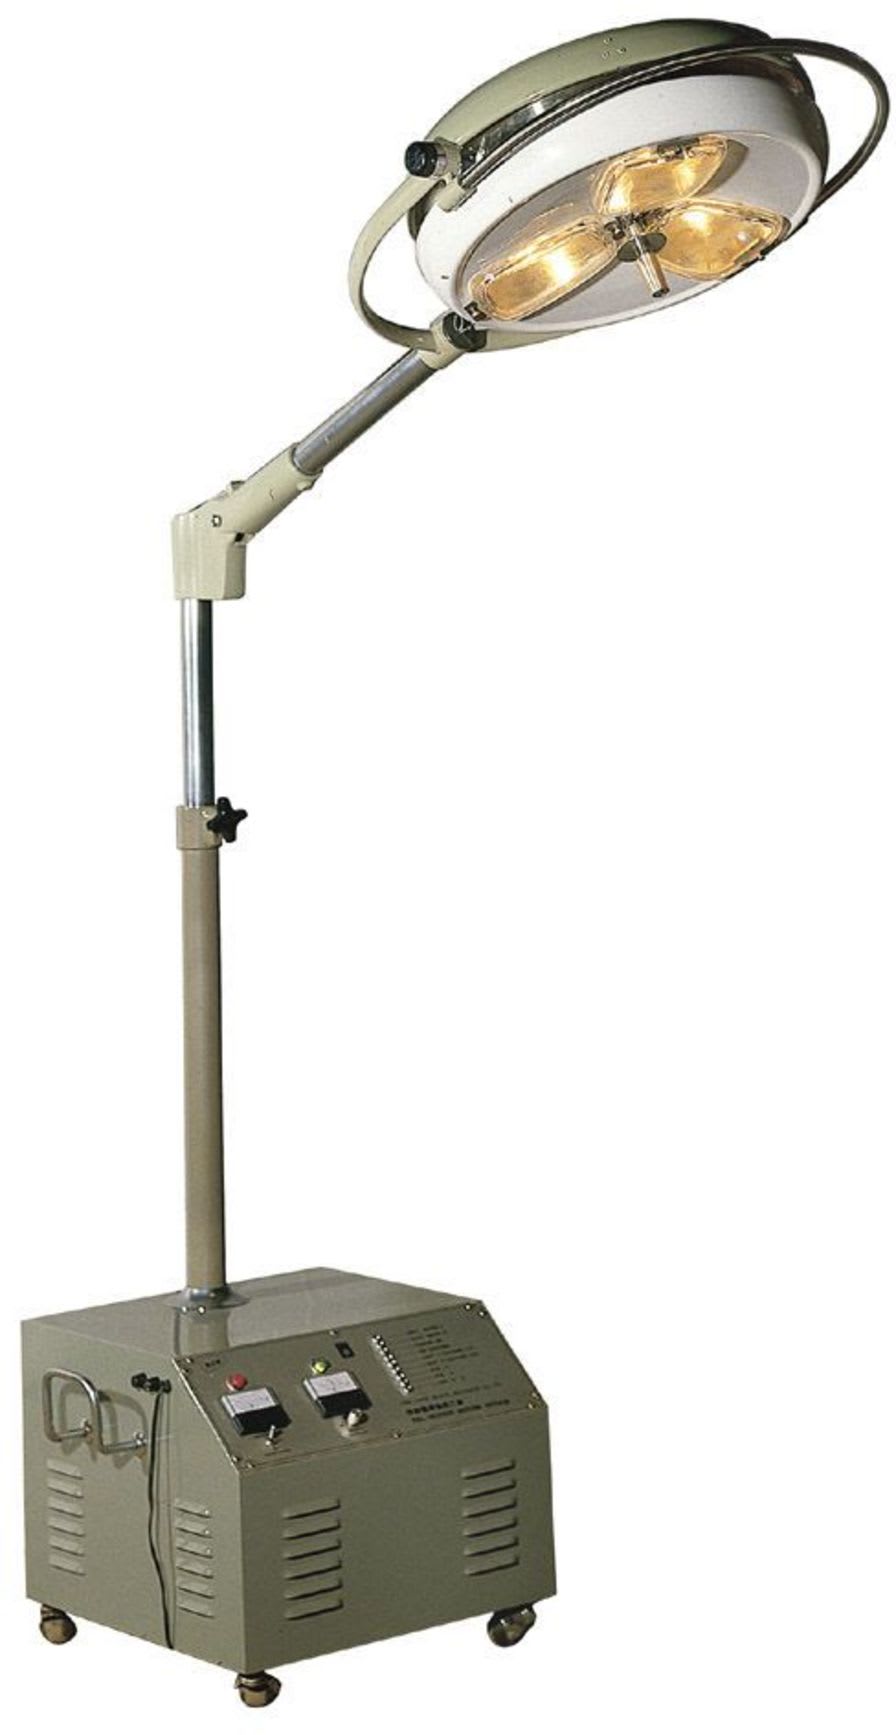 Halogen surgical light / mobile / 1-arm OLH61-003 St. Francis Medical Equipment